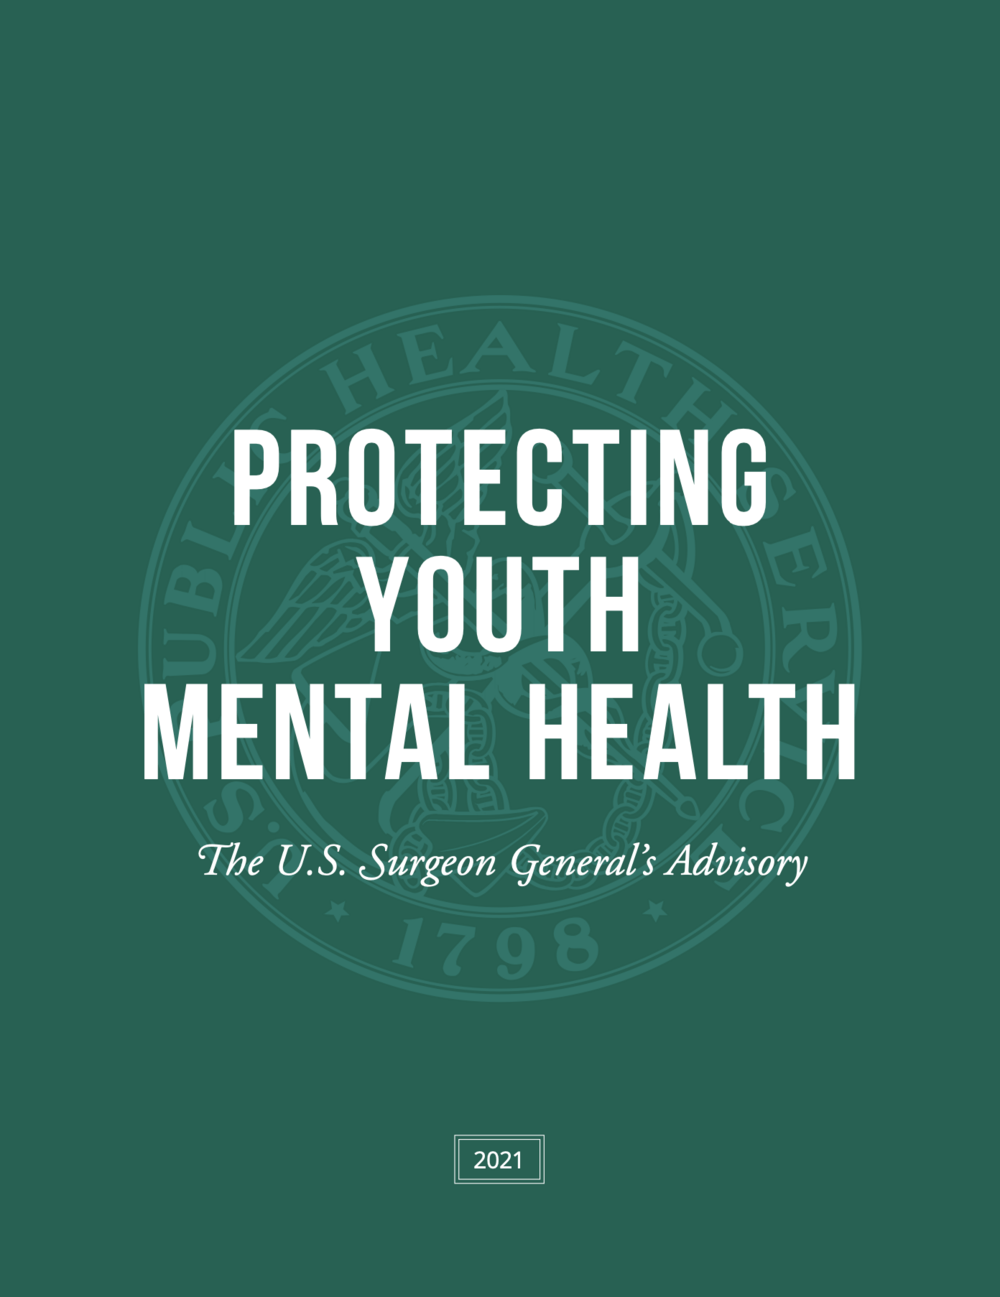 Protecting Youth Mental Health Advisory